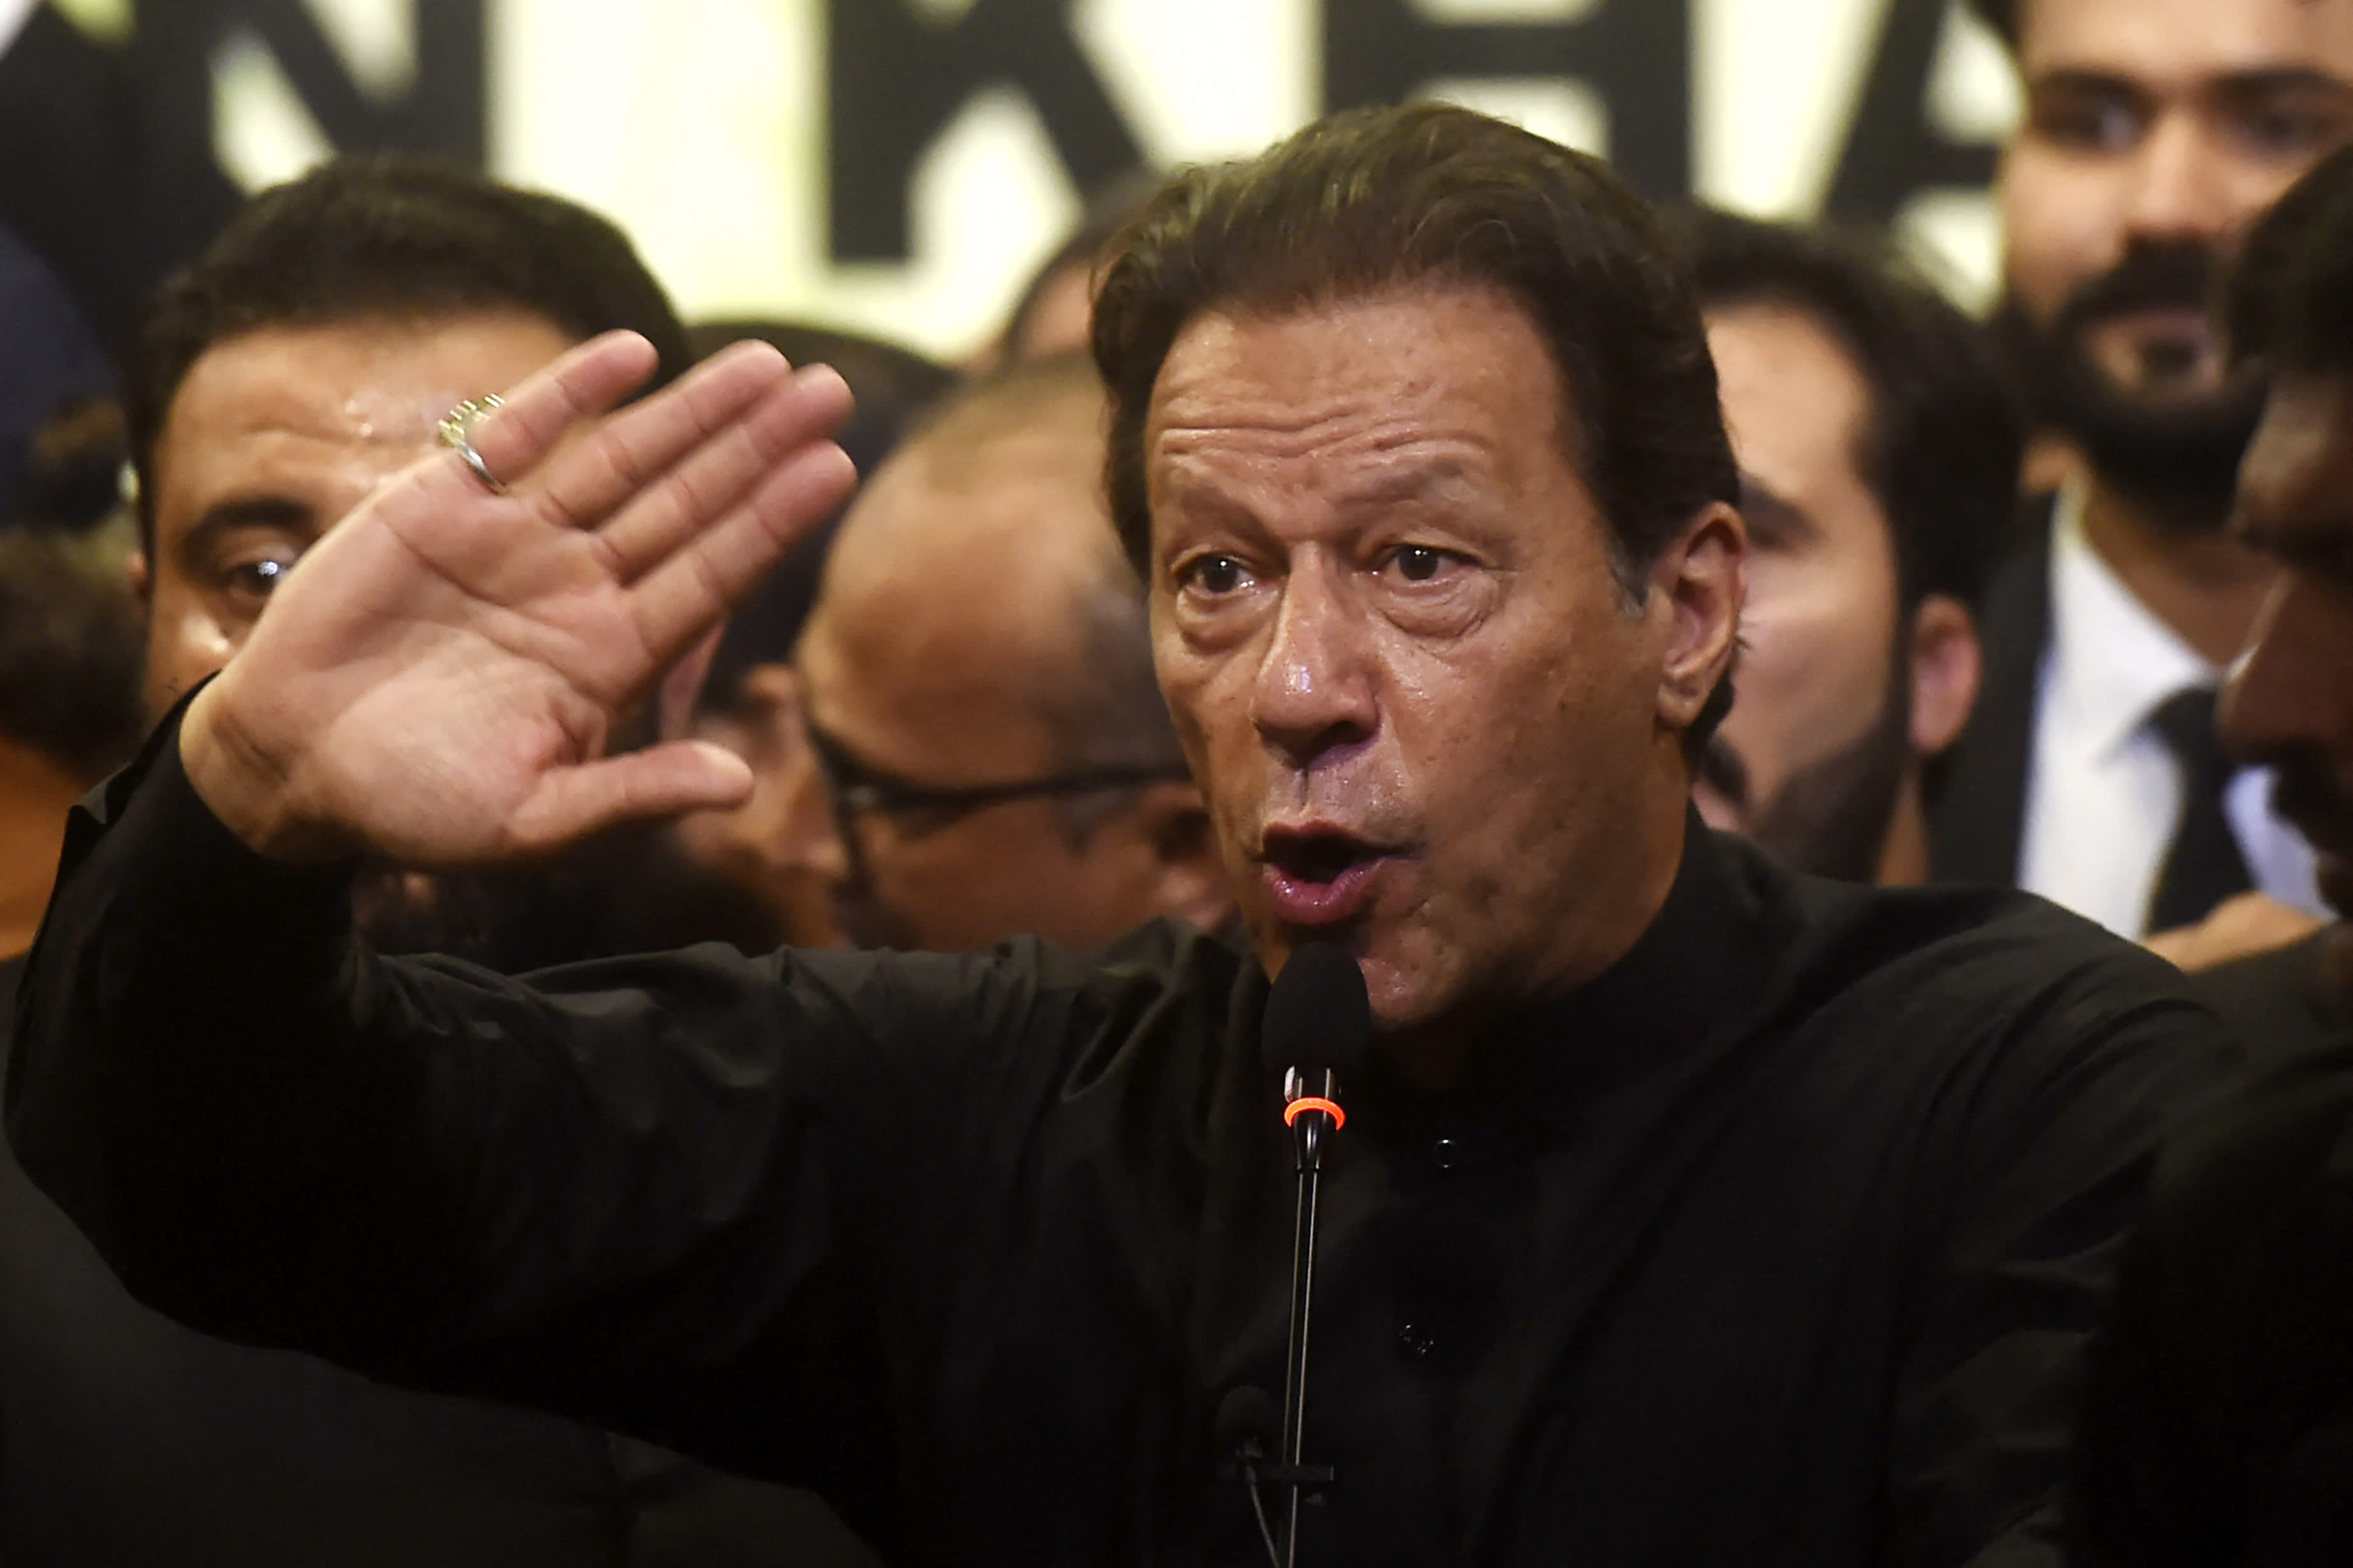 Pakistan ex-PM Imran Khan hit with new 14 year prison sentence